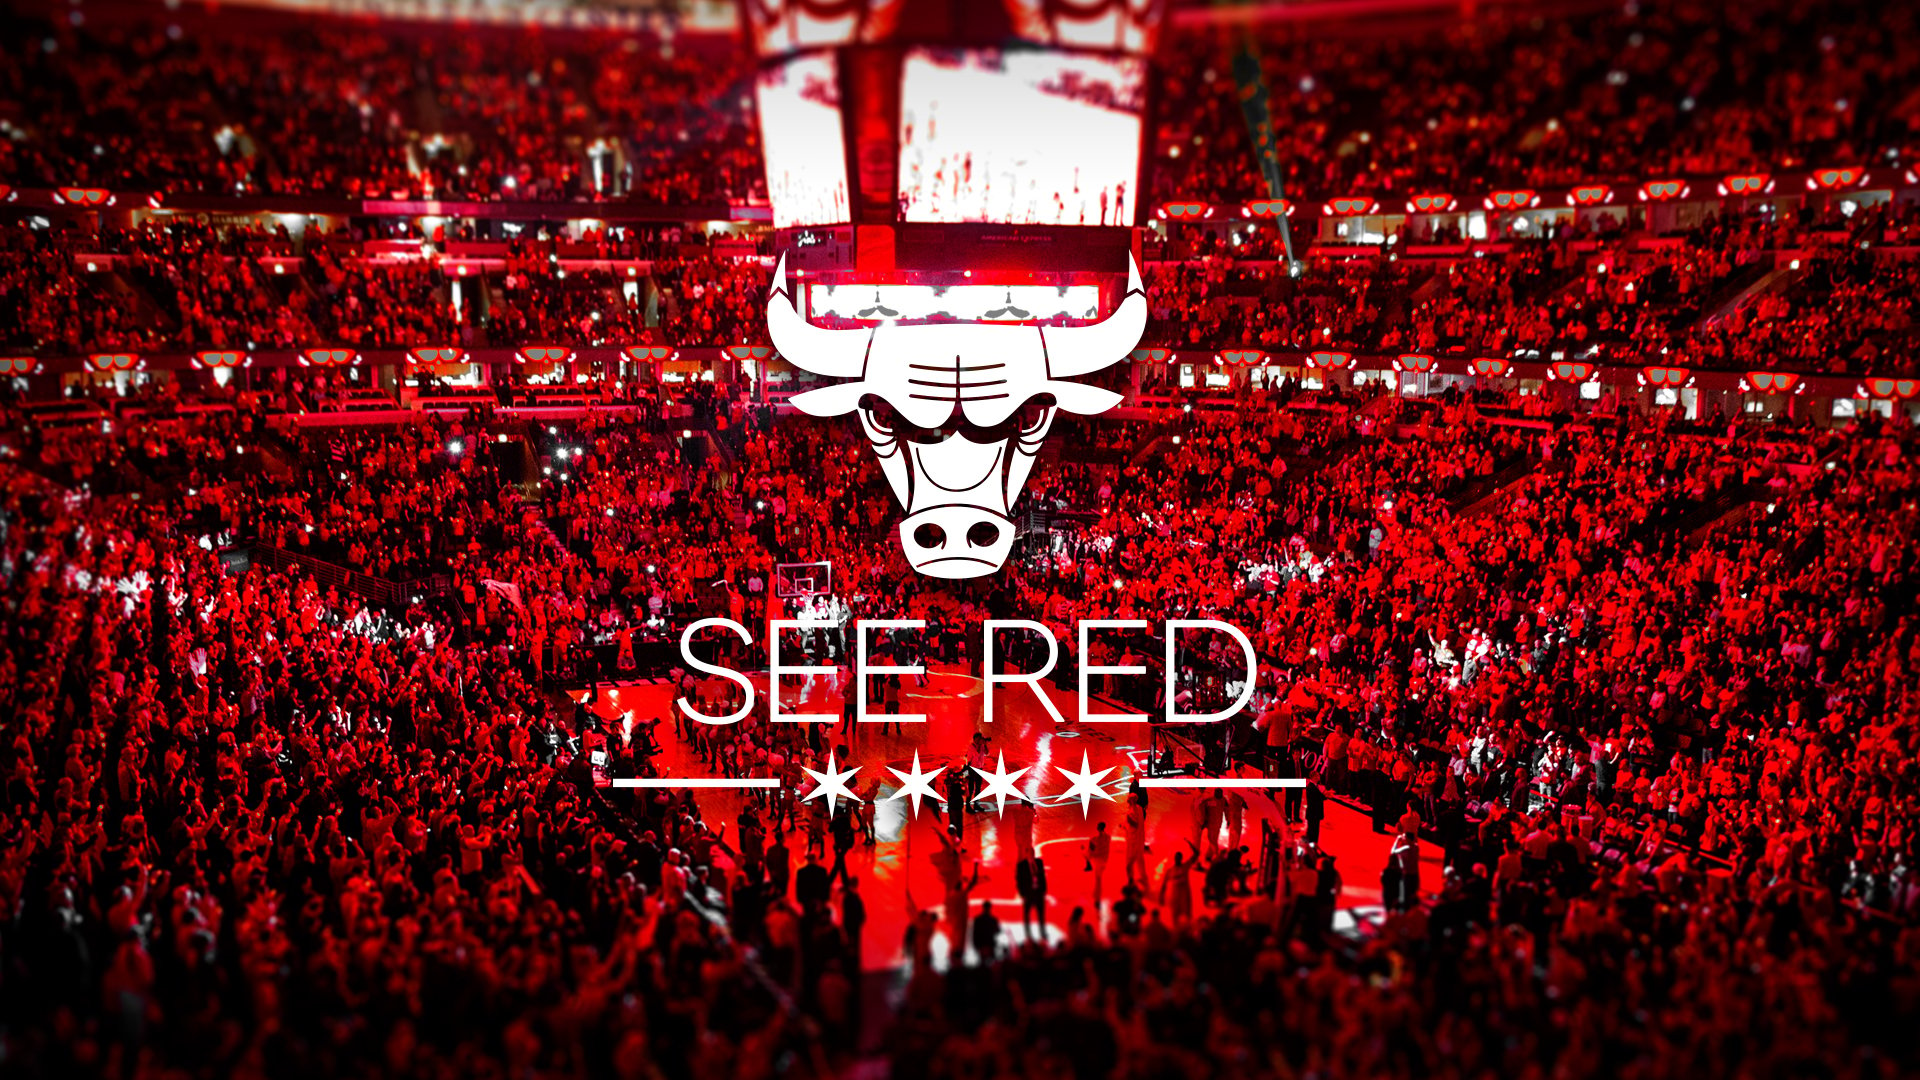 Chicago Bulls Wallpaper See Red wallpaper